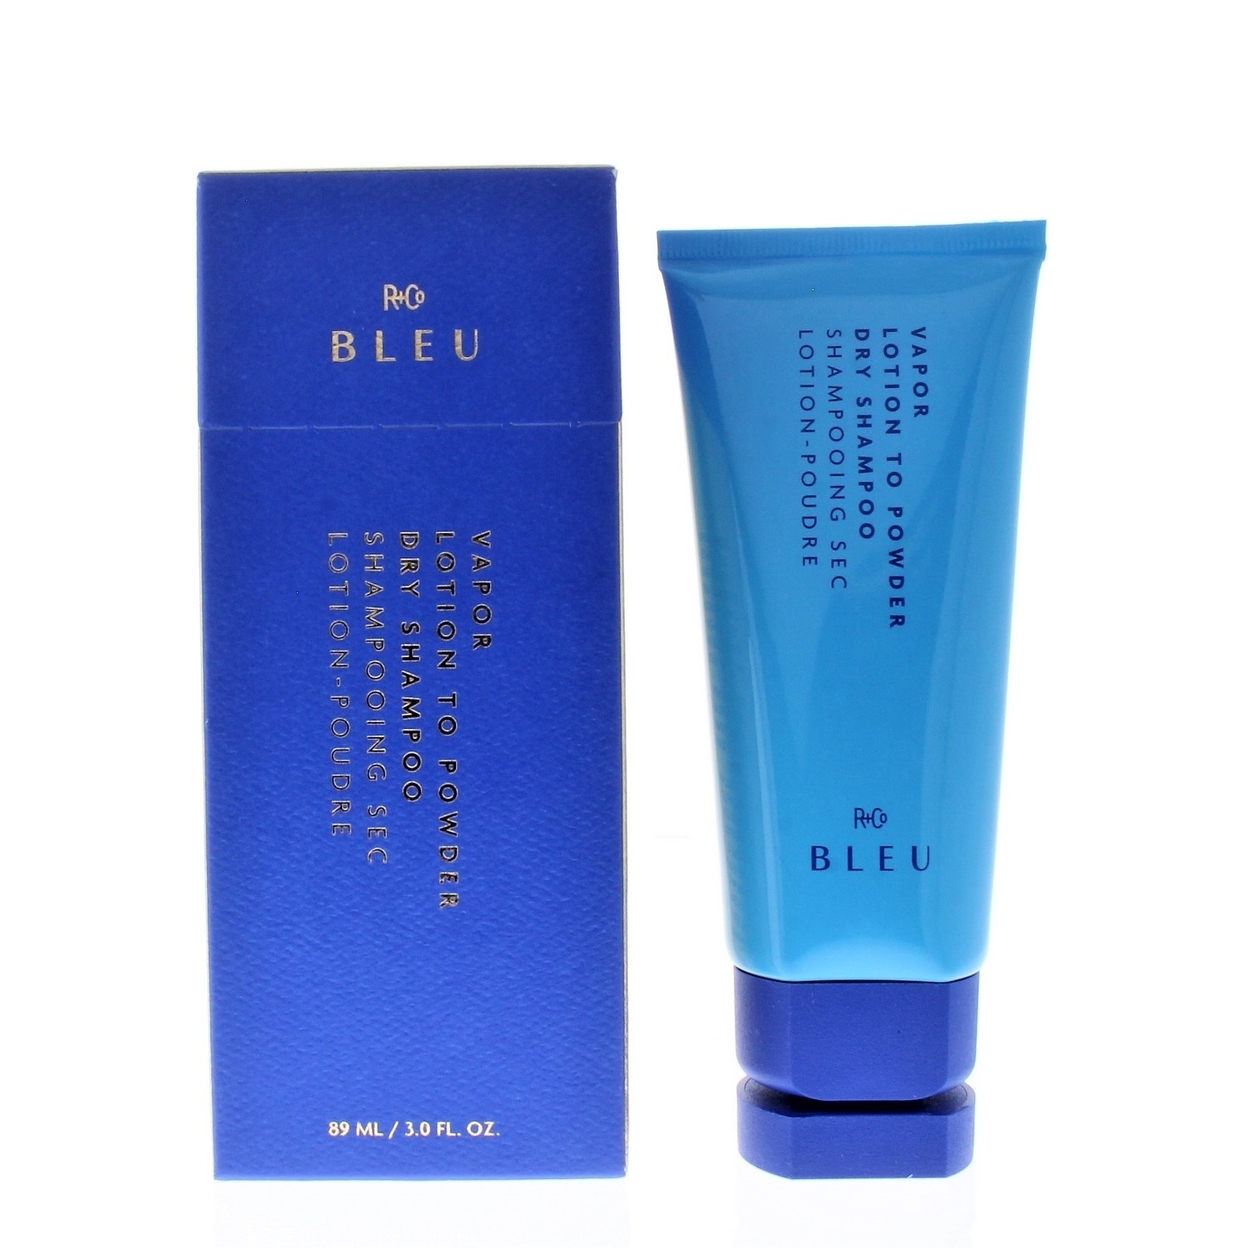 R+Co Bleu Vapor Lotion To Powder Dry Shampoo 3oz/89ml